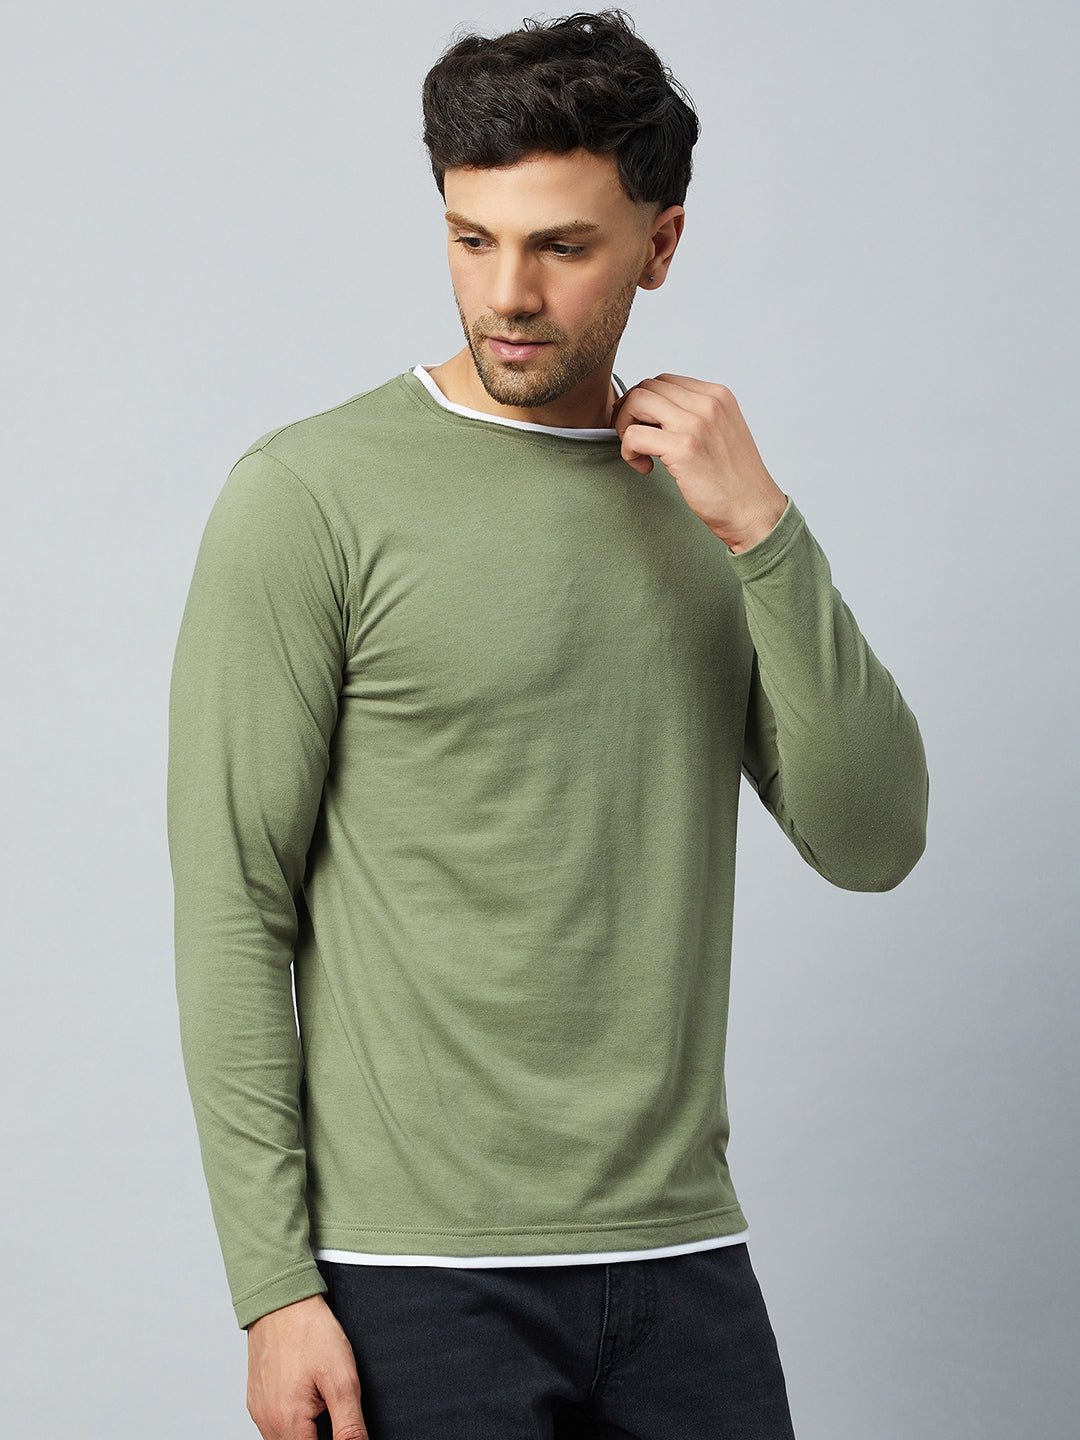 Pista Green Solid Tshirt - clubyork